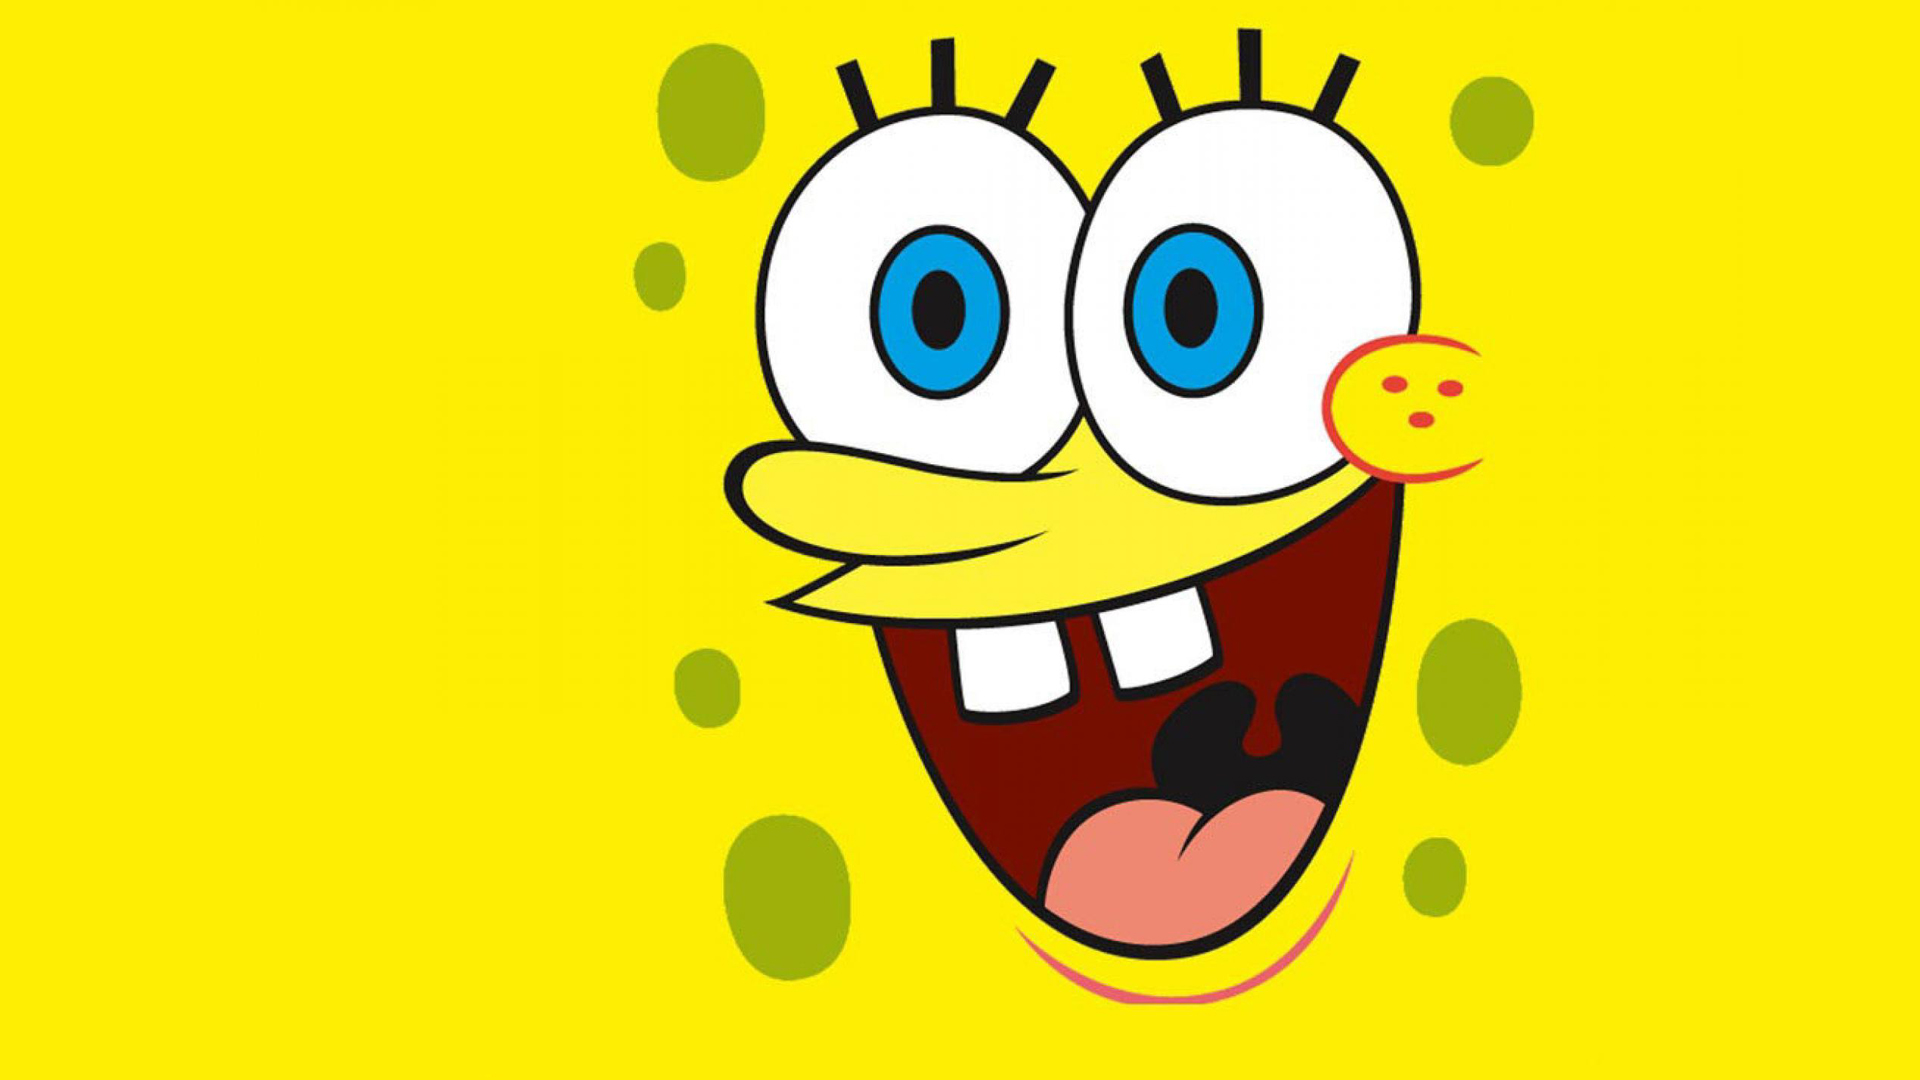 HD X Spongebob Wallpaper Image And Choose Set As Background